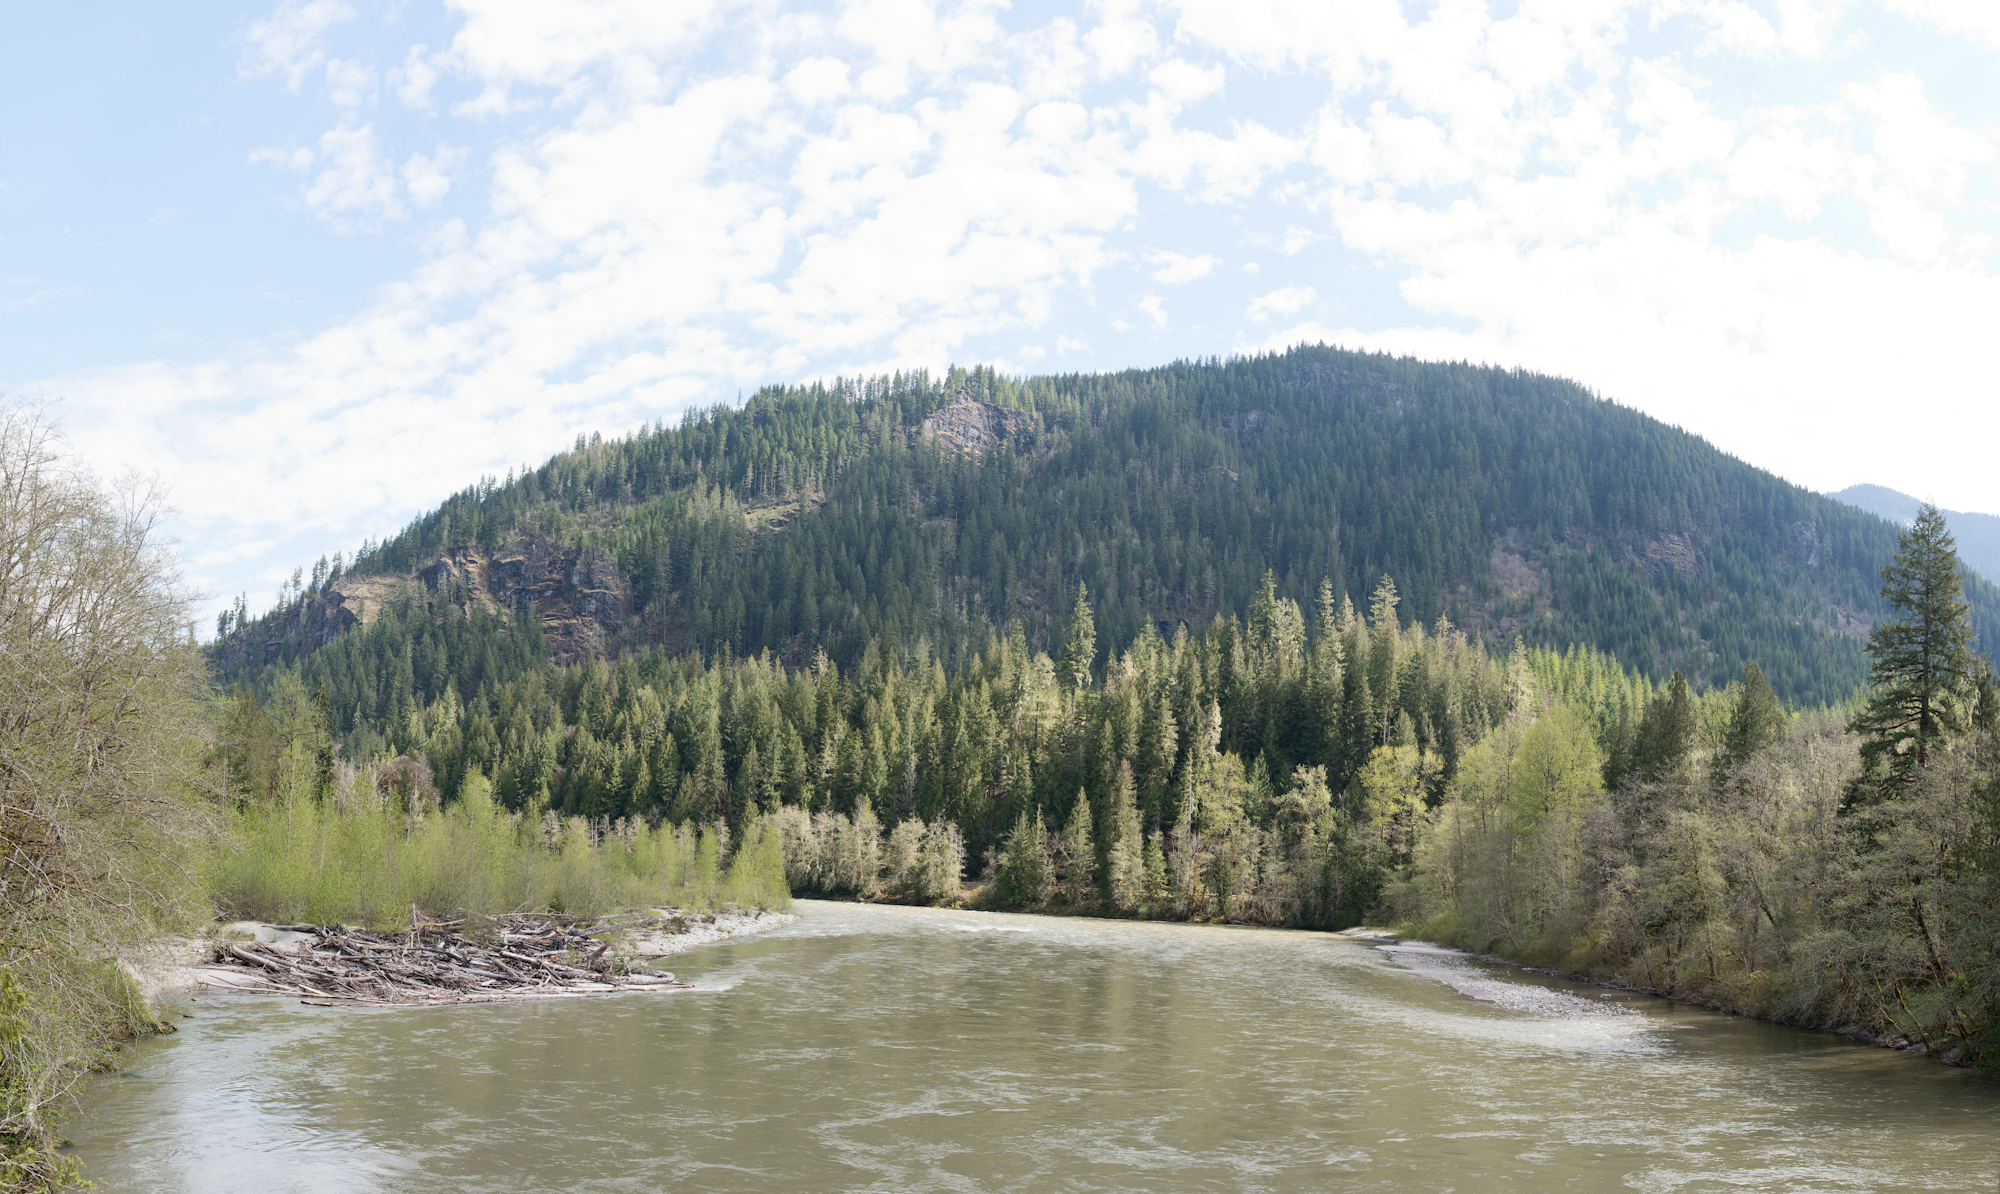 A panoramic view of the Sauk River, Washington State.